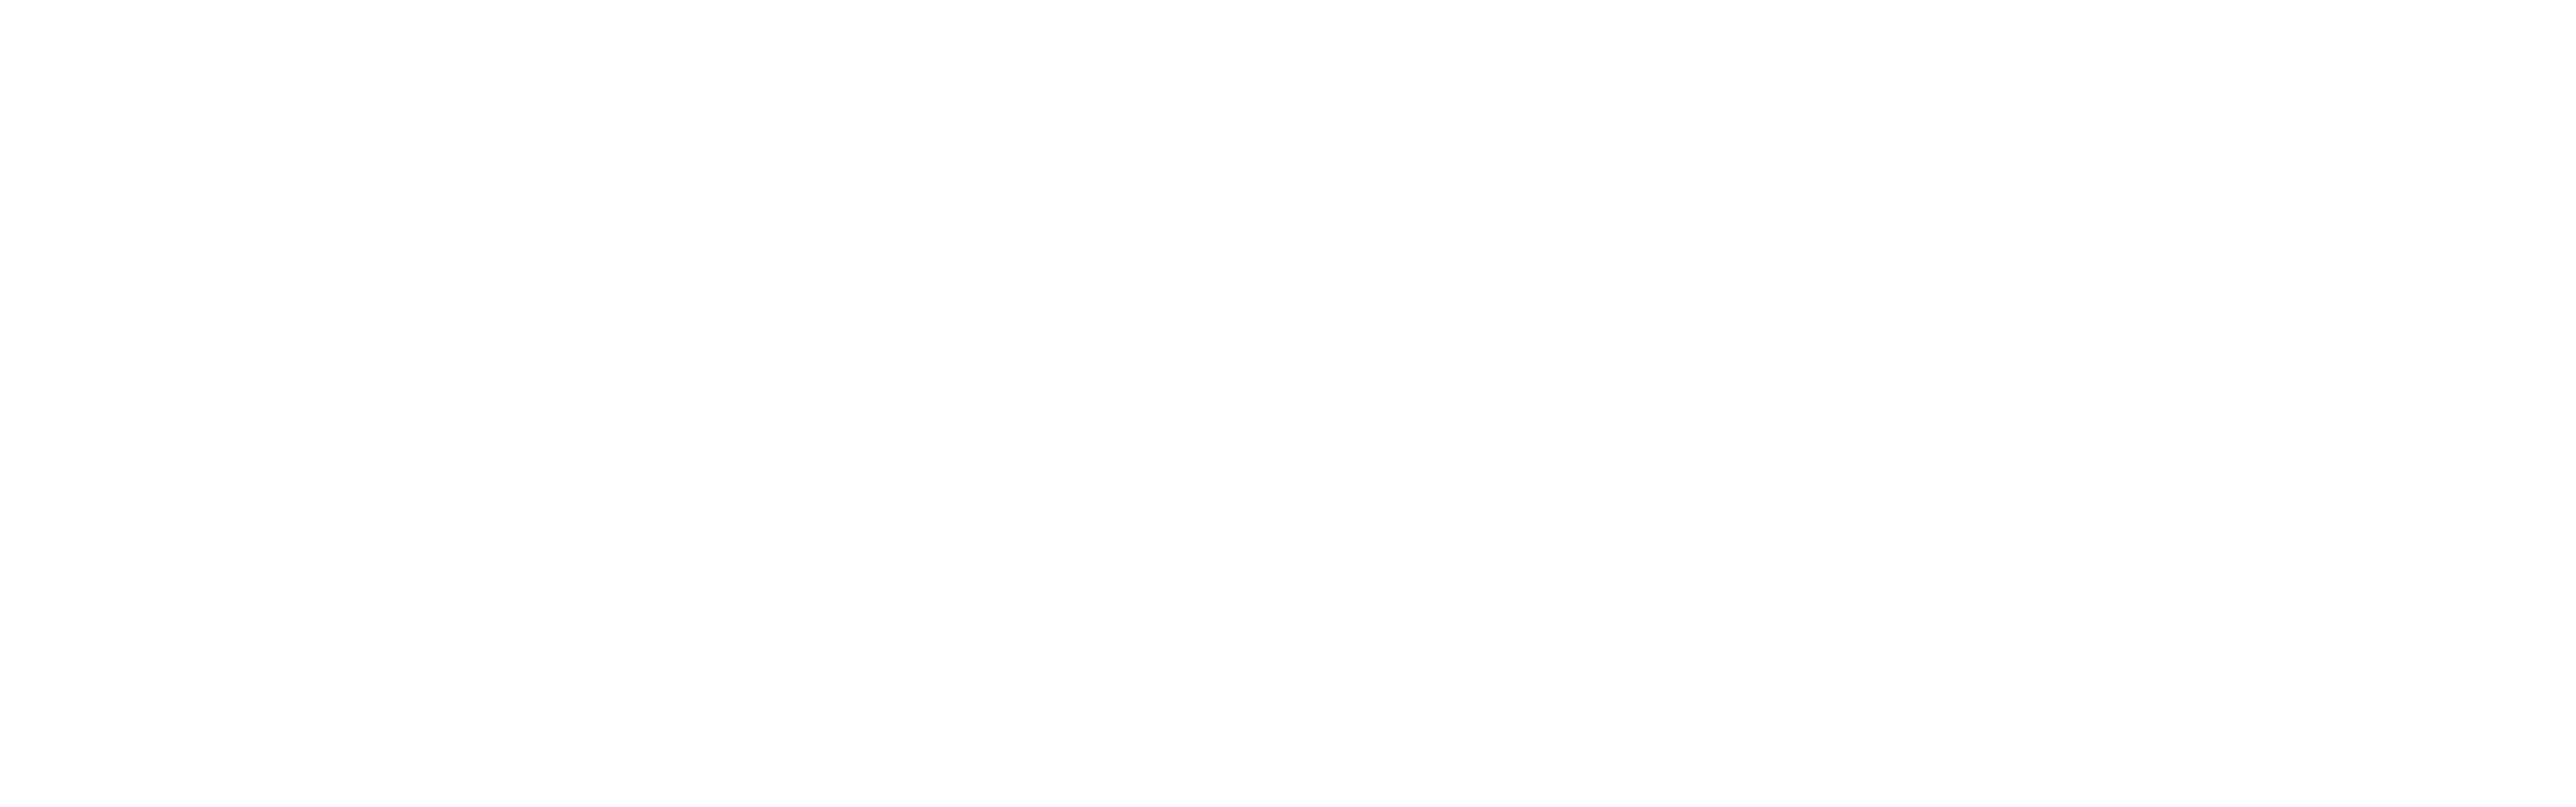 BKPITAL BUSINESS CENTER